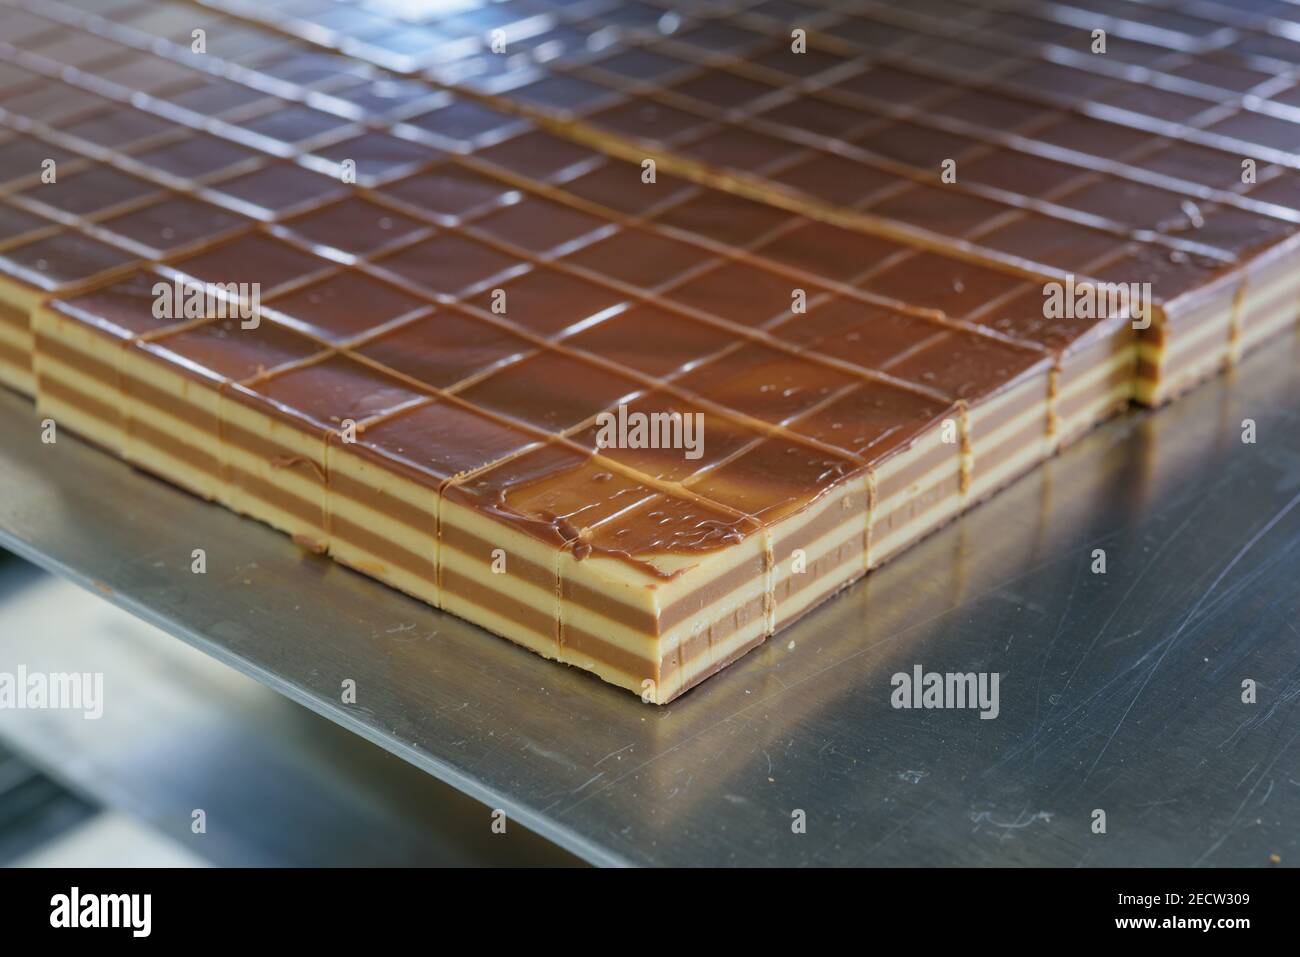 Jonny-Schokoladeerzeugung, Schichtnougat Foto Stock